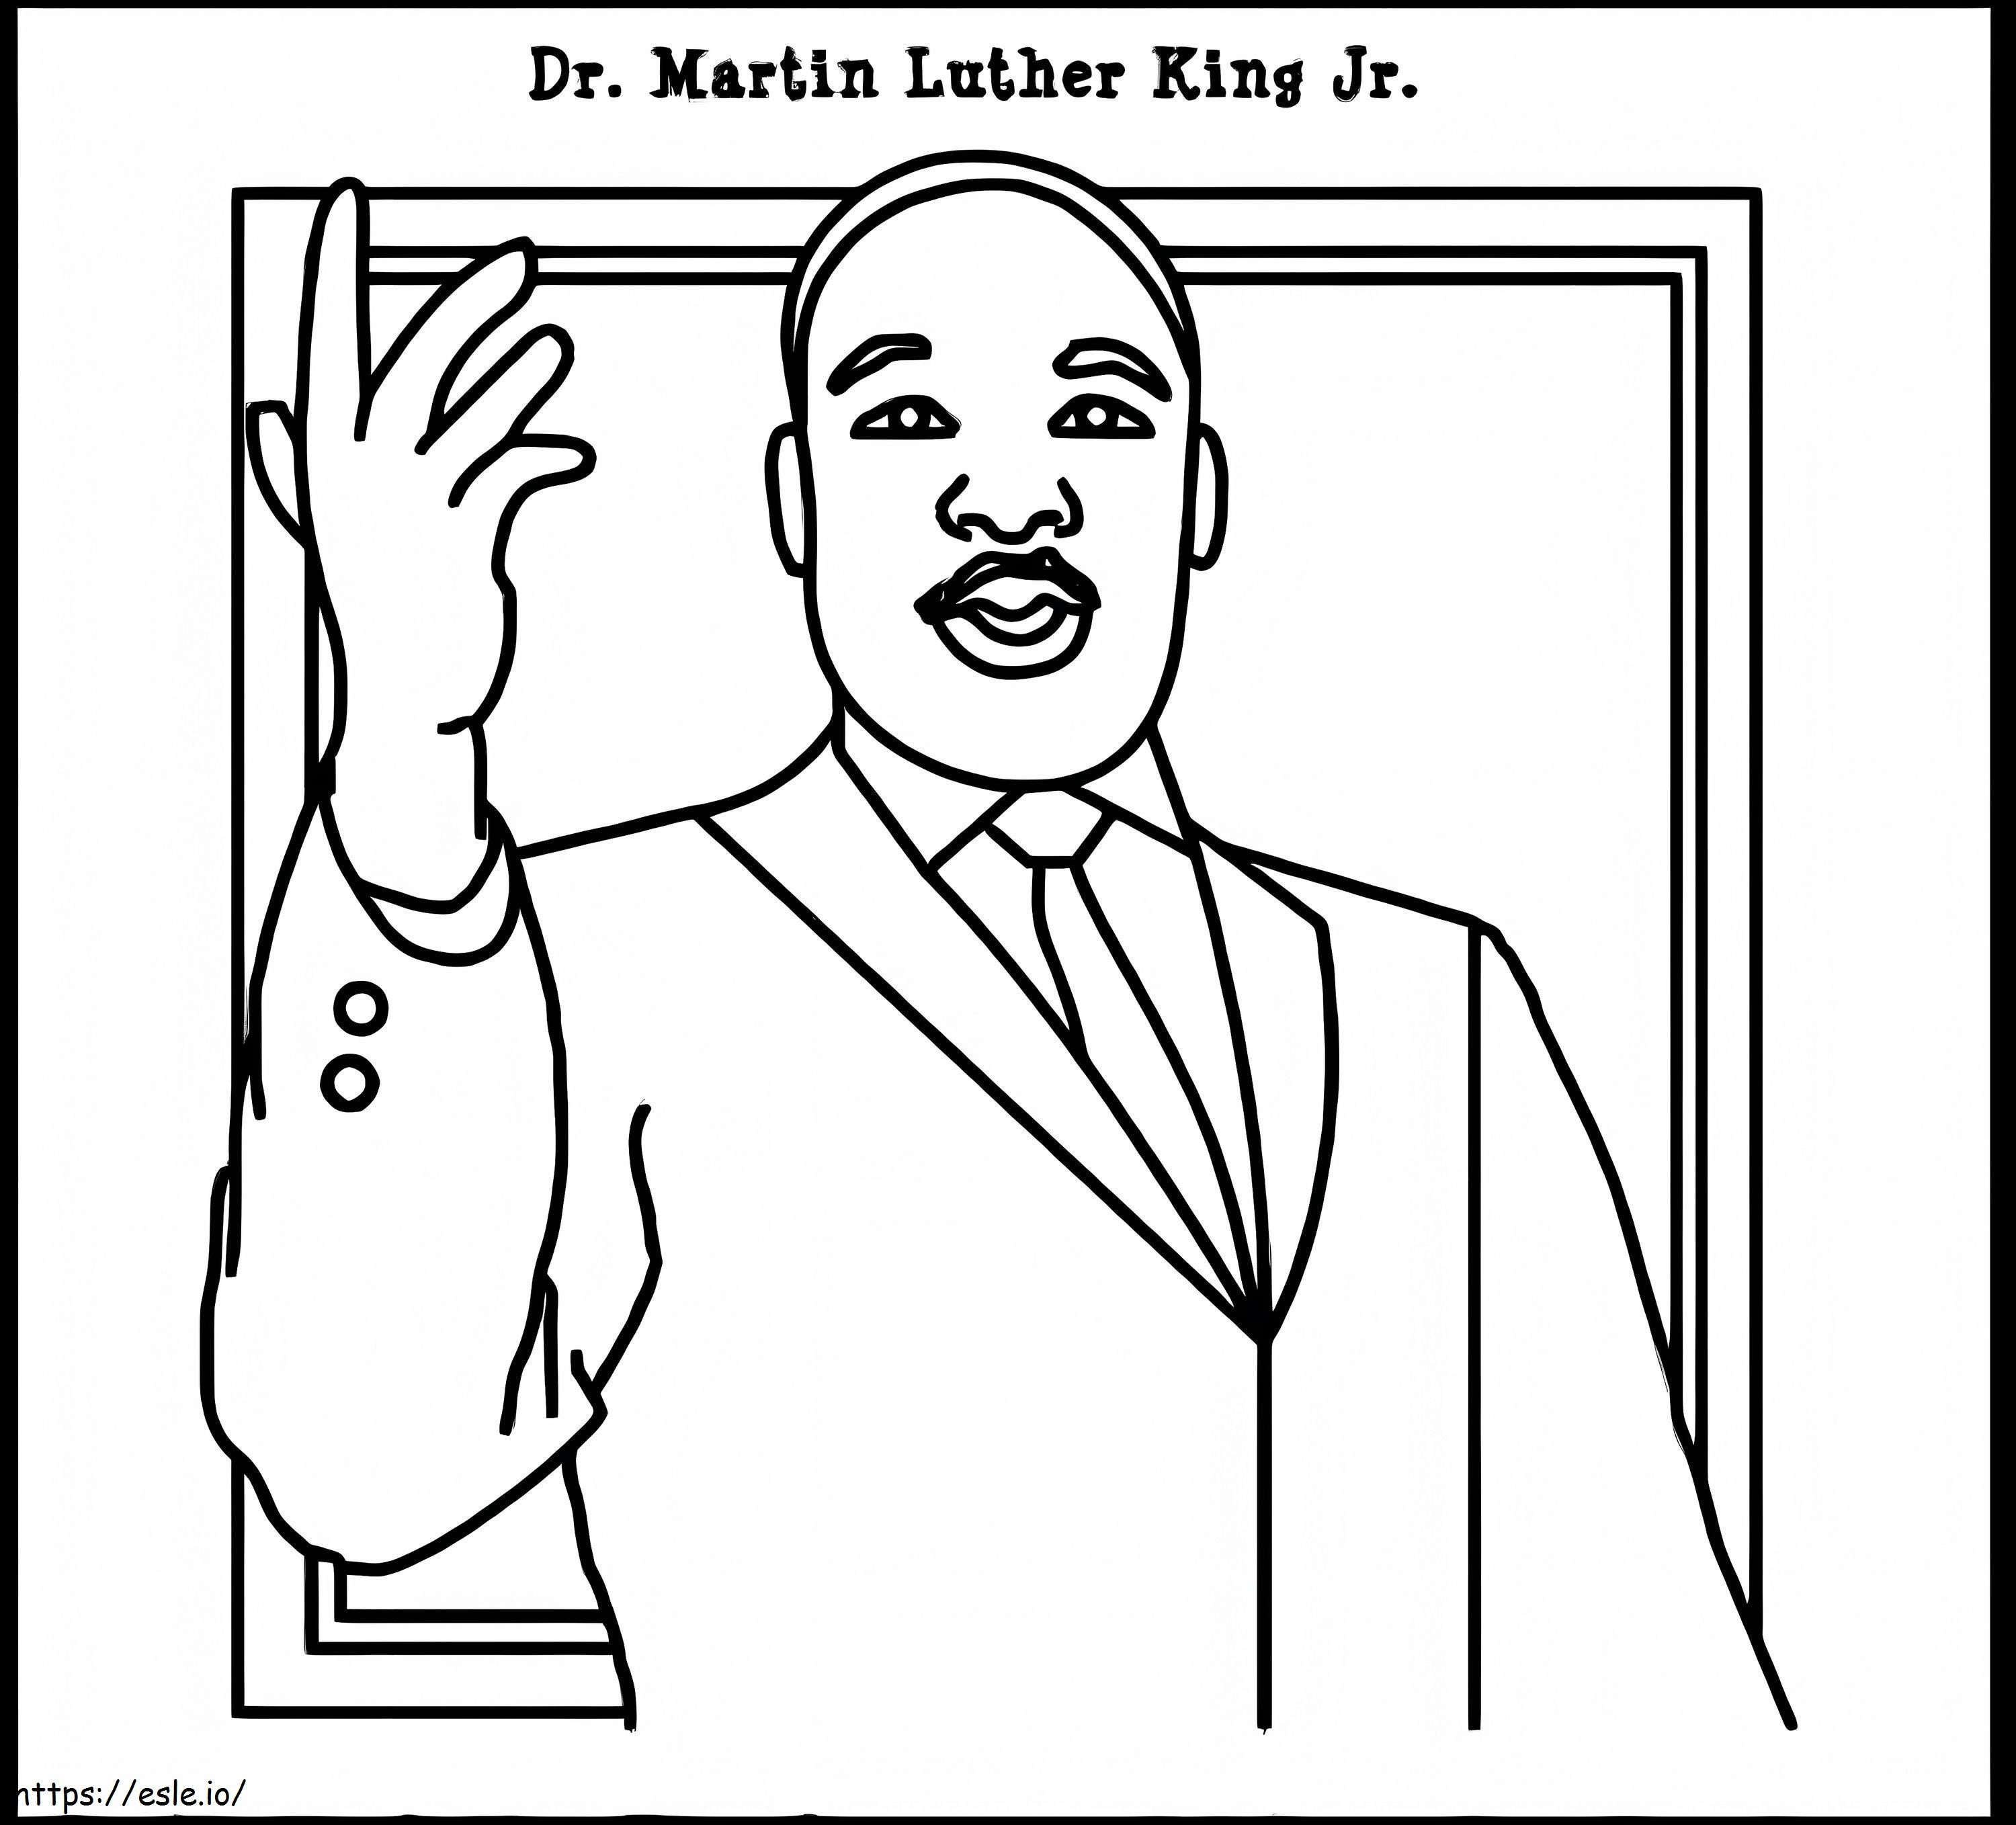 Martin Luther King Jr. 8 boyama